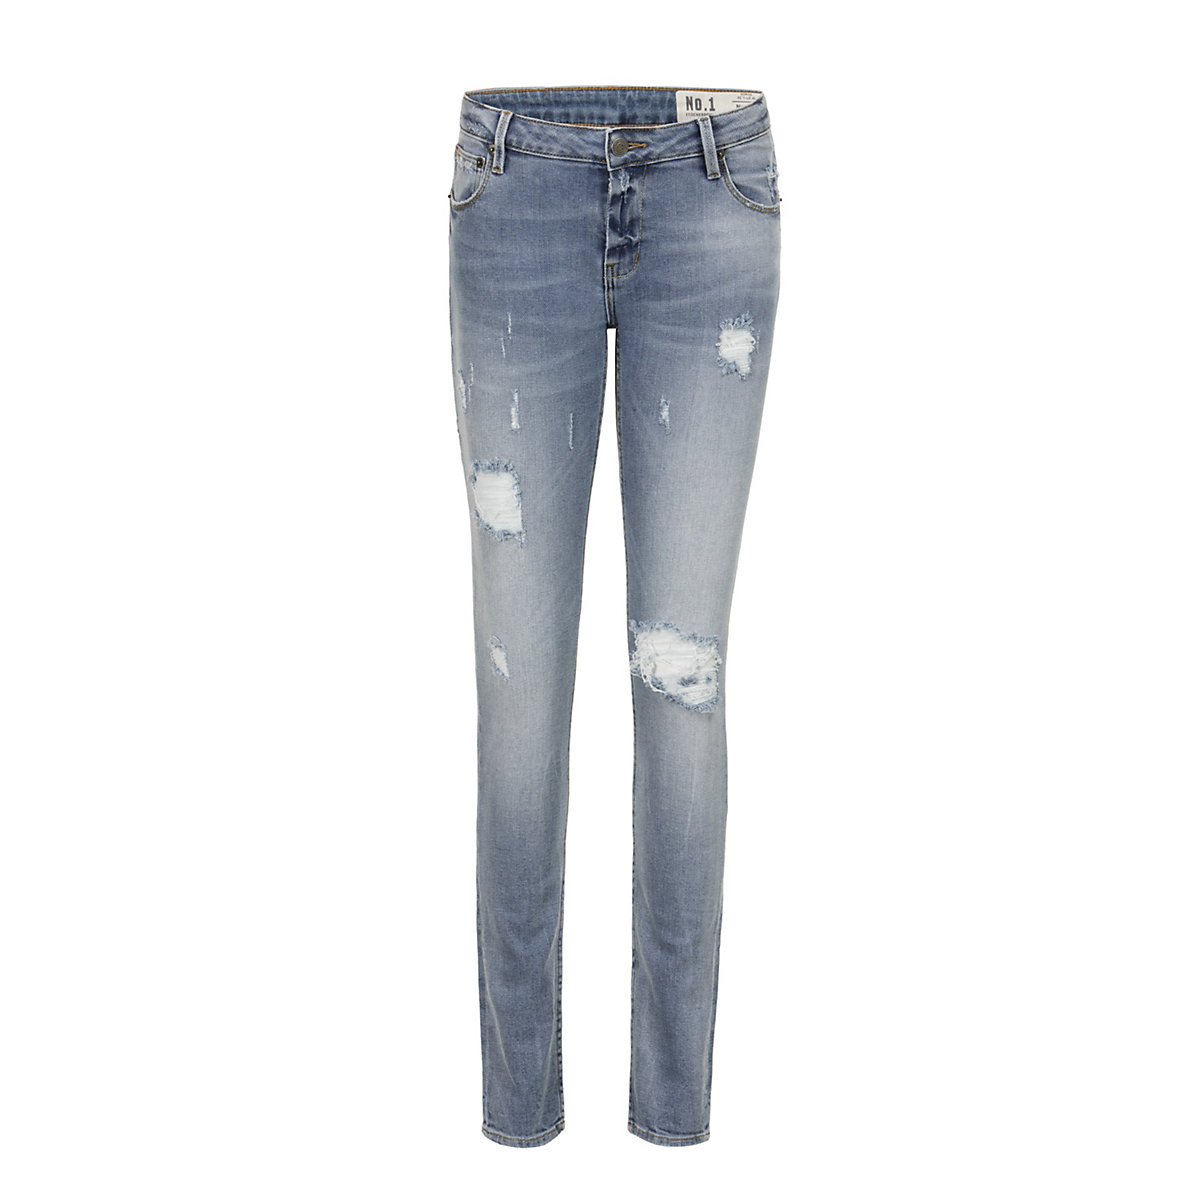 Stockerpoint Jeans No 1-50 Shorts grau